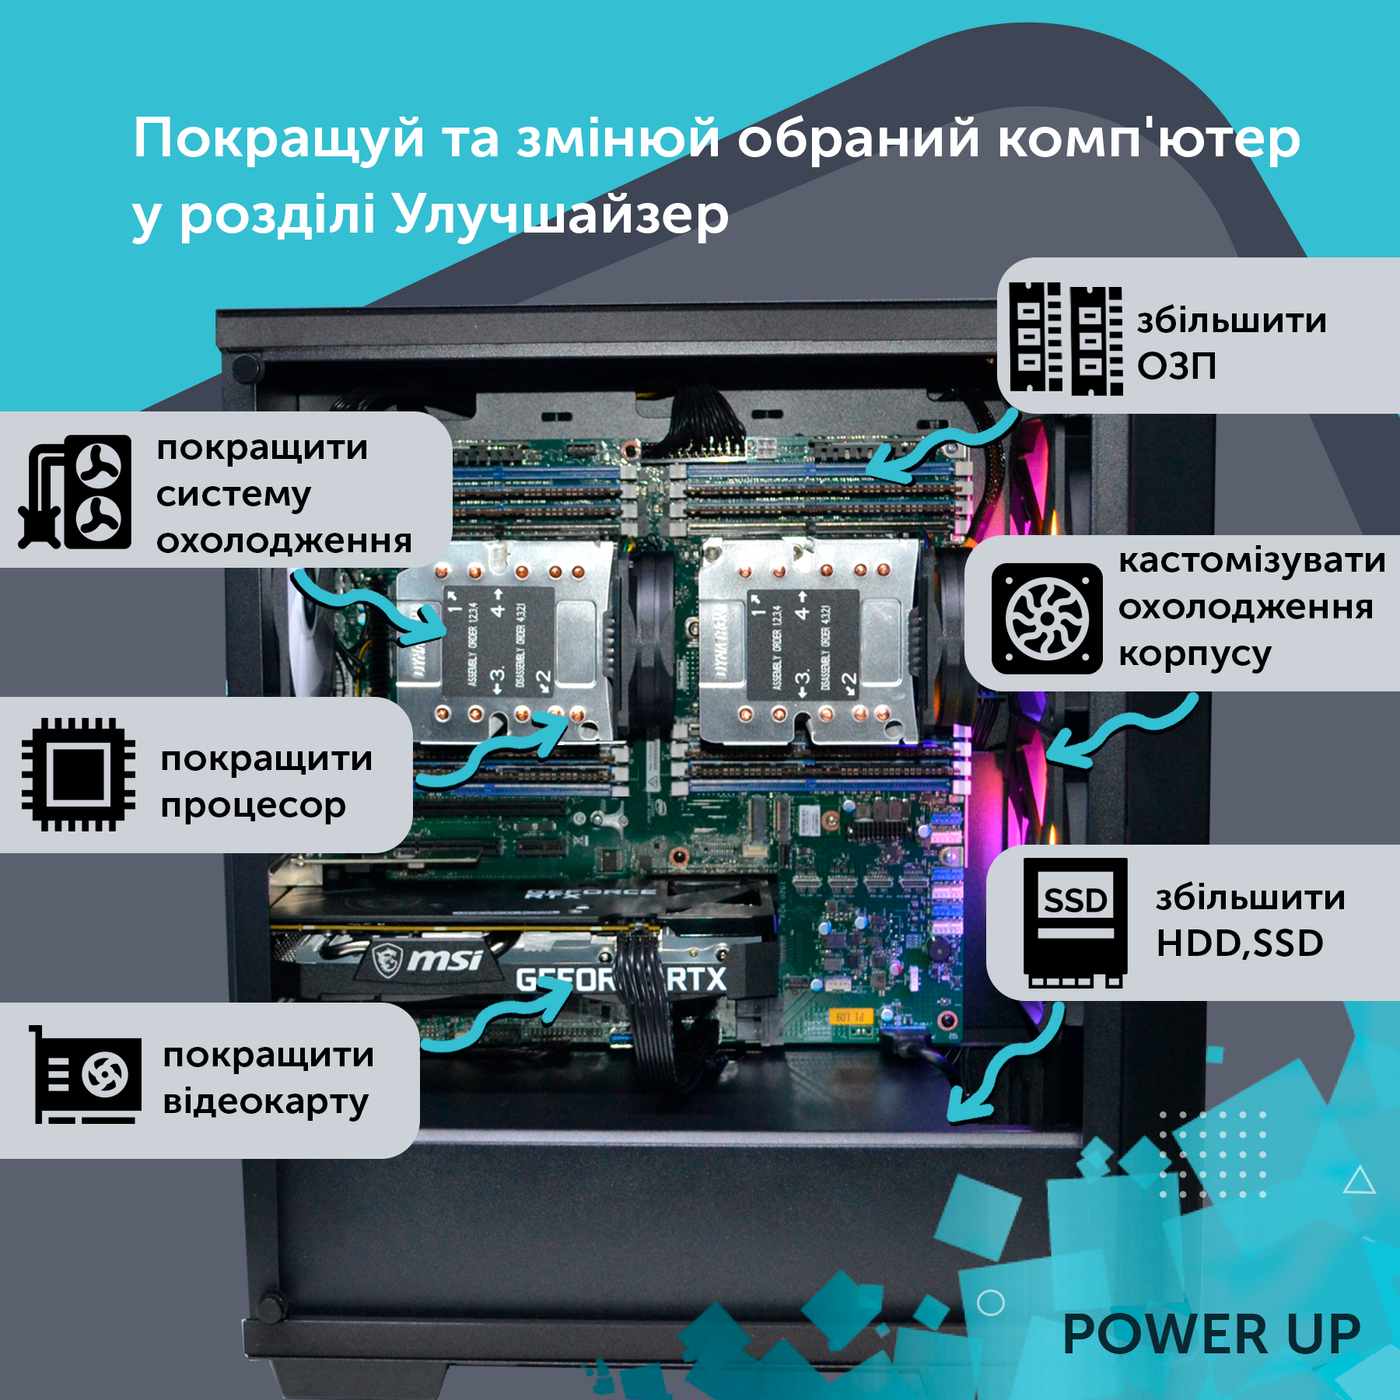 Рабочая станция PowerUp Desktop #260 Core i9 13900K/64 GB/SSD 2TB/GeForce RTX 4060 8GB